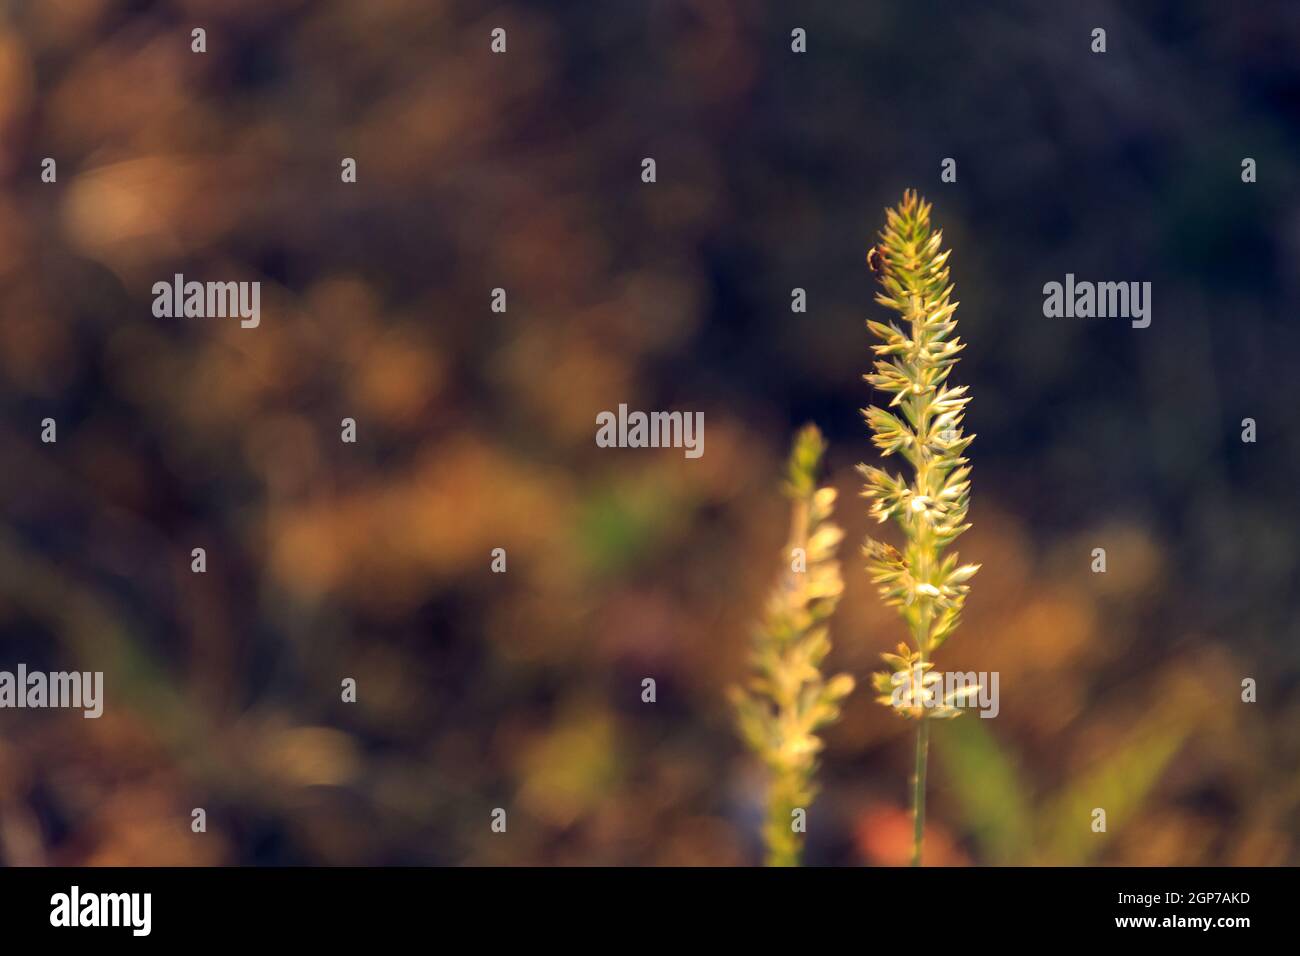 Closeup shot of allium altaicum on a blurred background Stock Photo